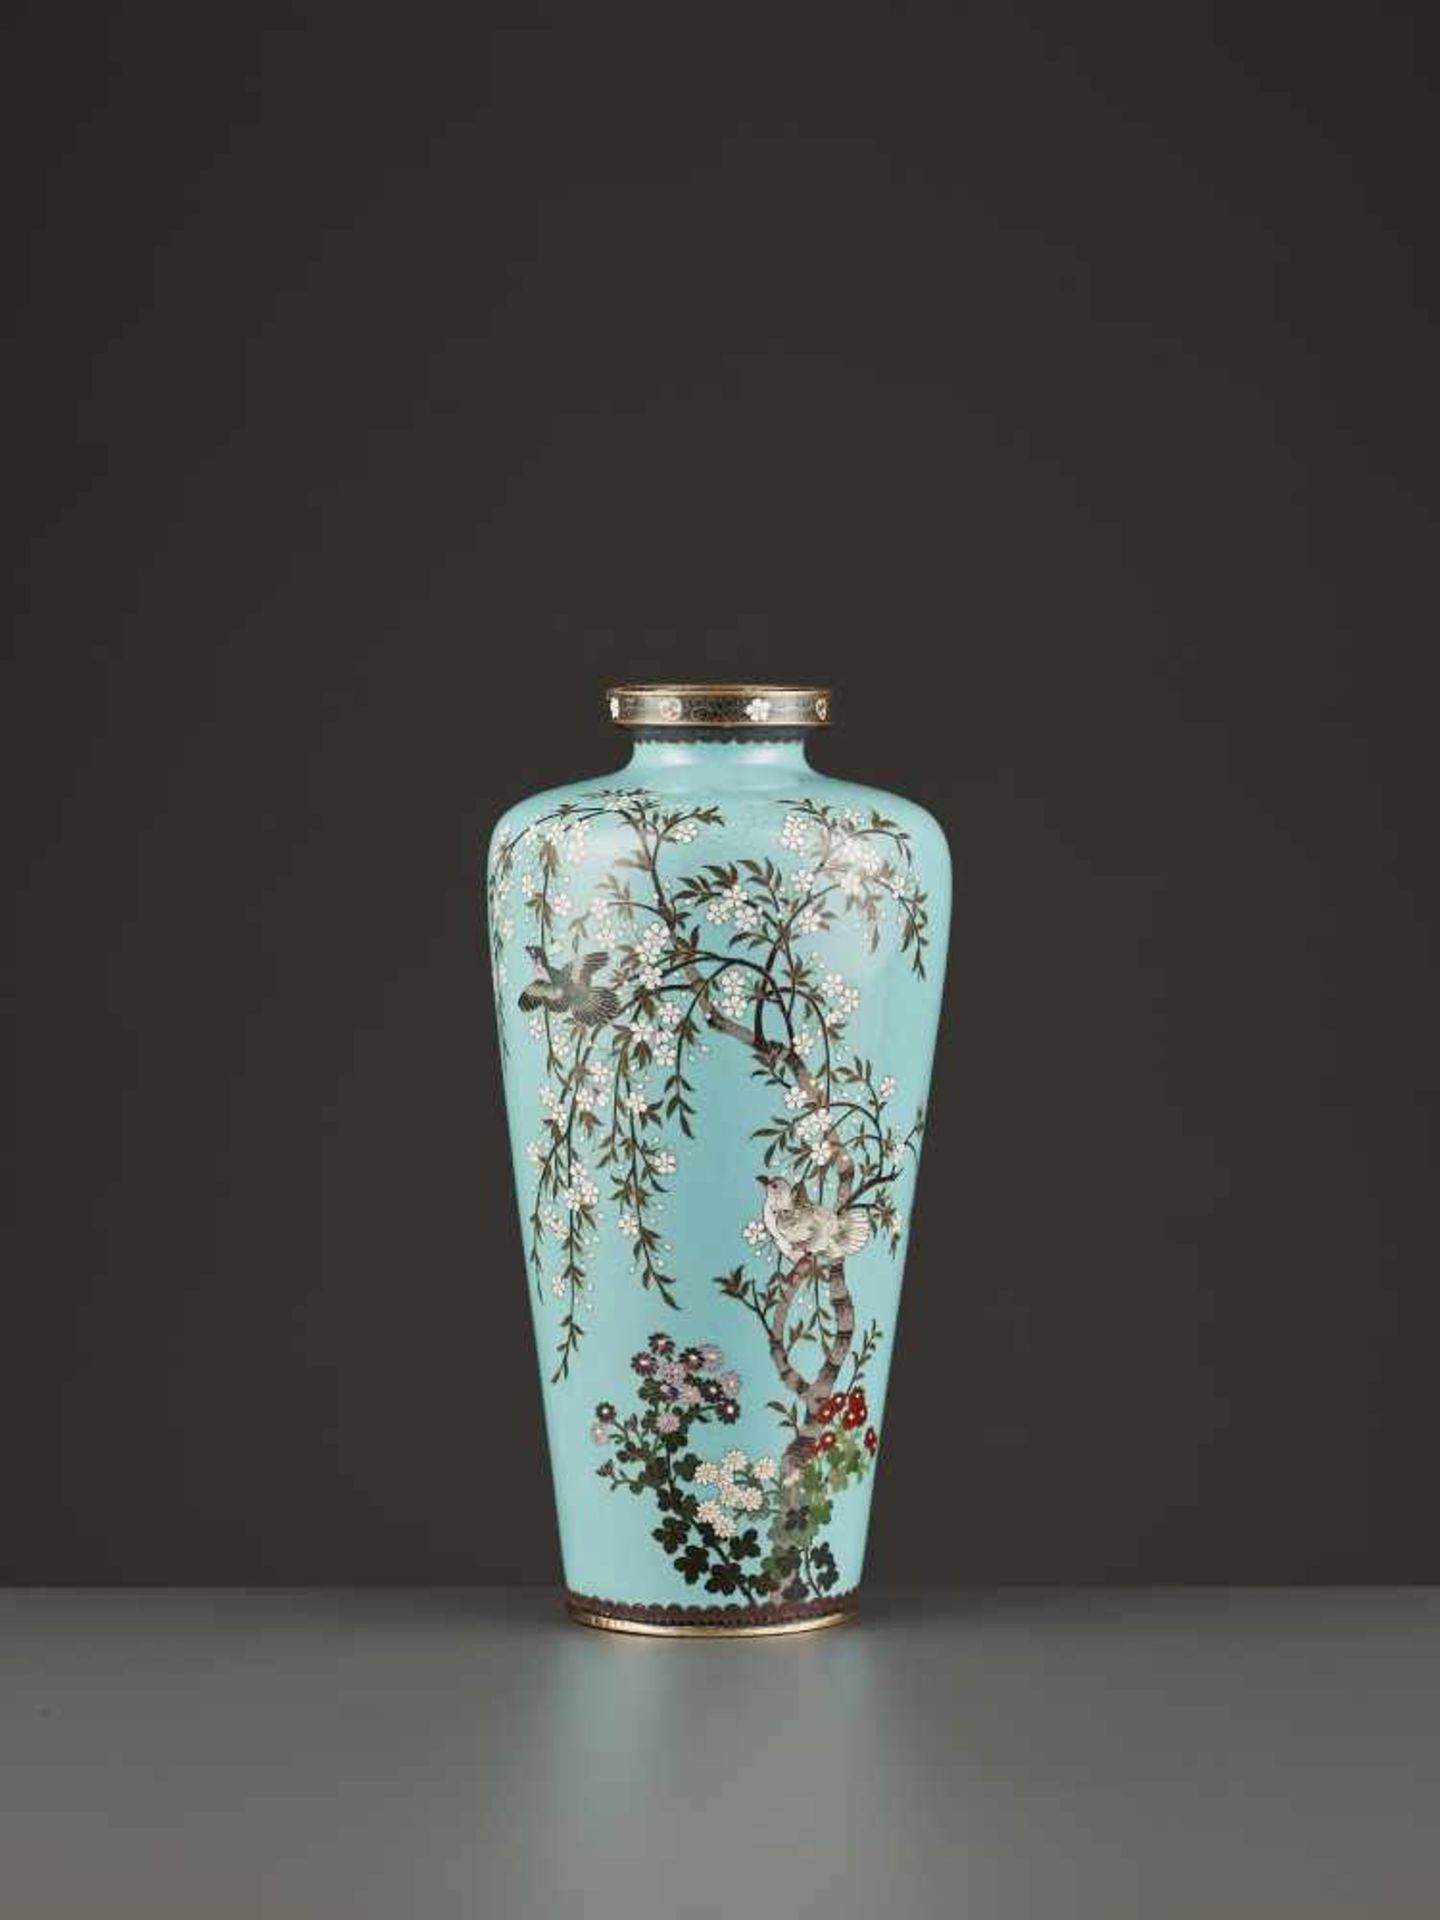 A HAYASHI CHUZO CLOISONNÉ VASE Japan, Meiji period (1868-1912). The baluster vase decorated in